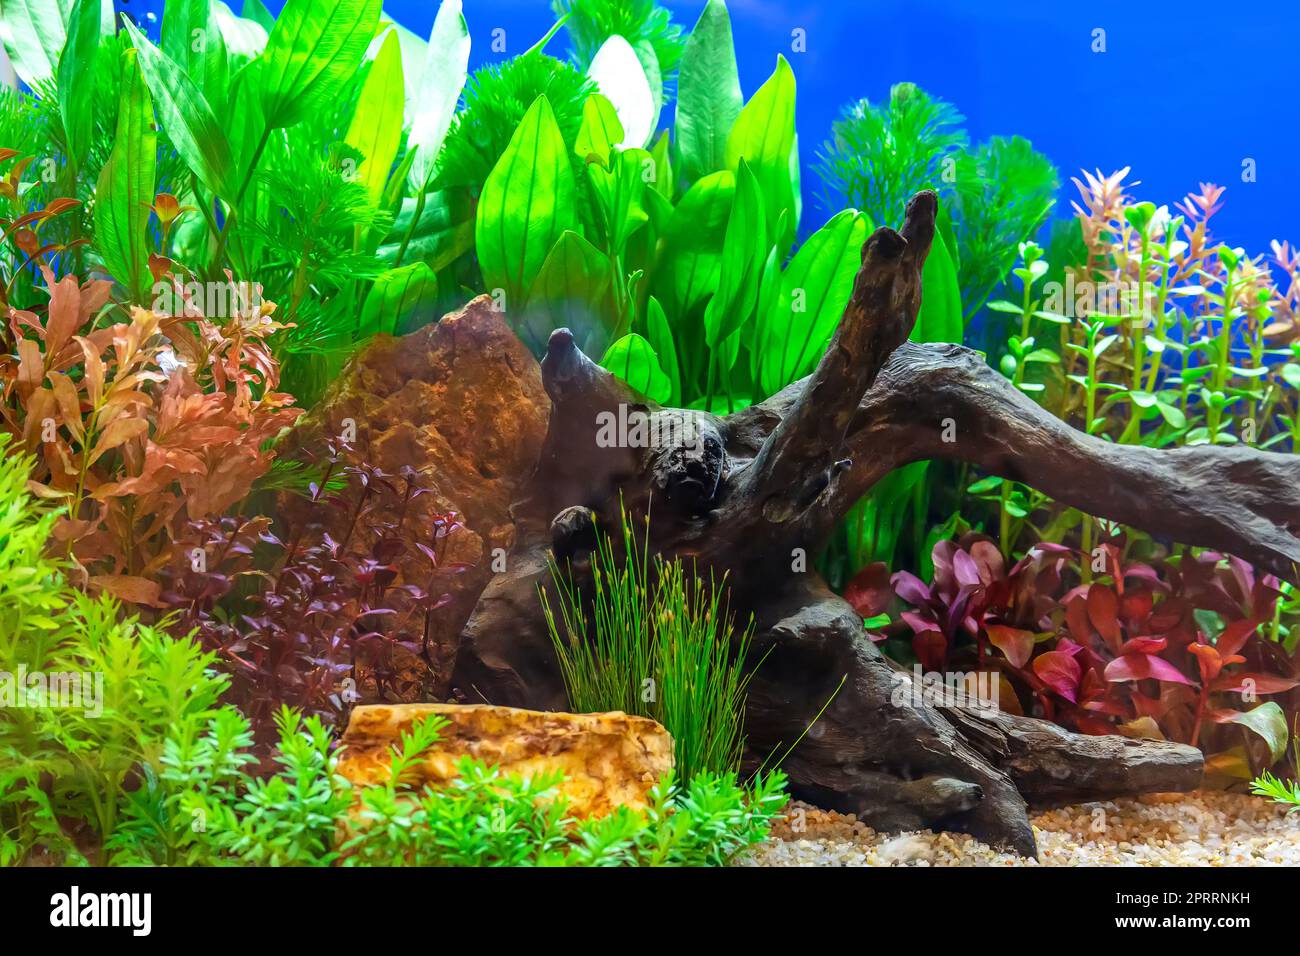 Tropical freshwater aquarium Stock Photo - Alamy